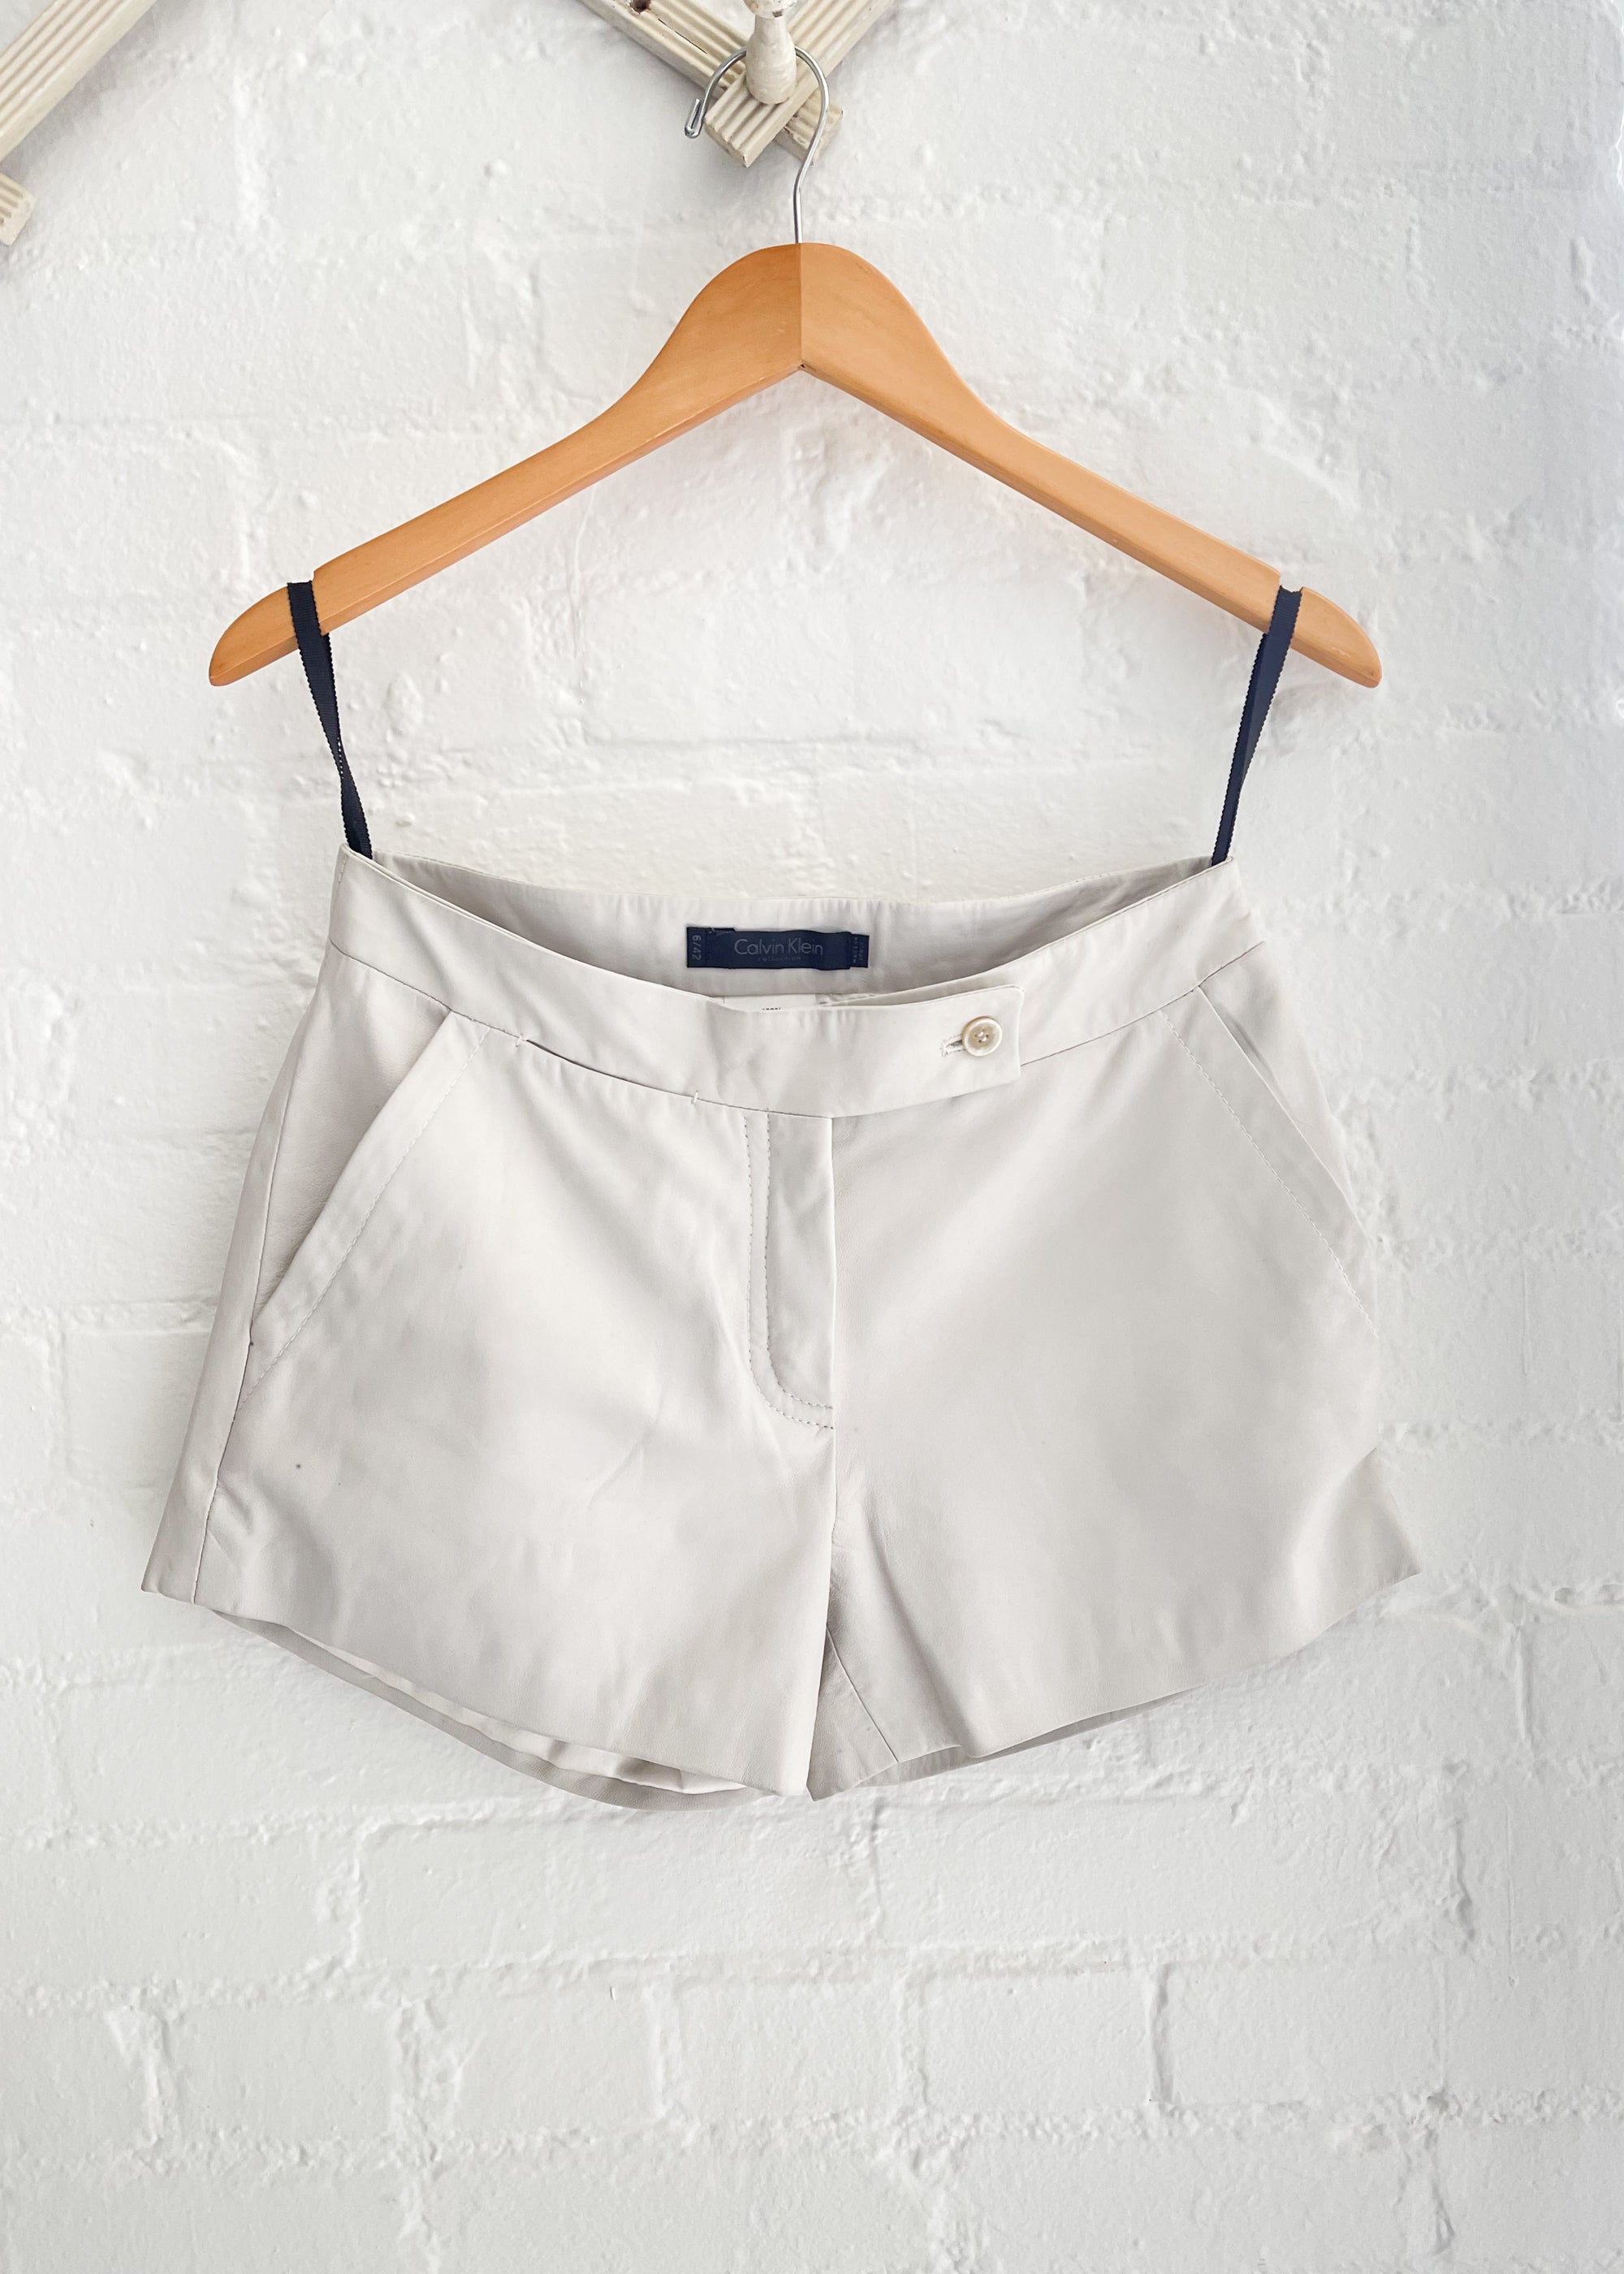 Vintage Calvin Klein Leather Shorts - Raleigh Vintage